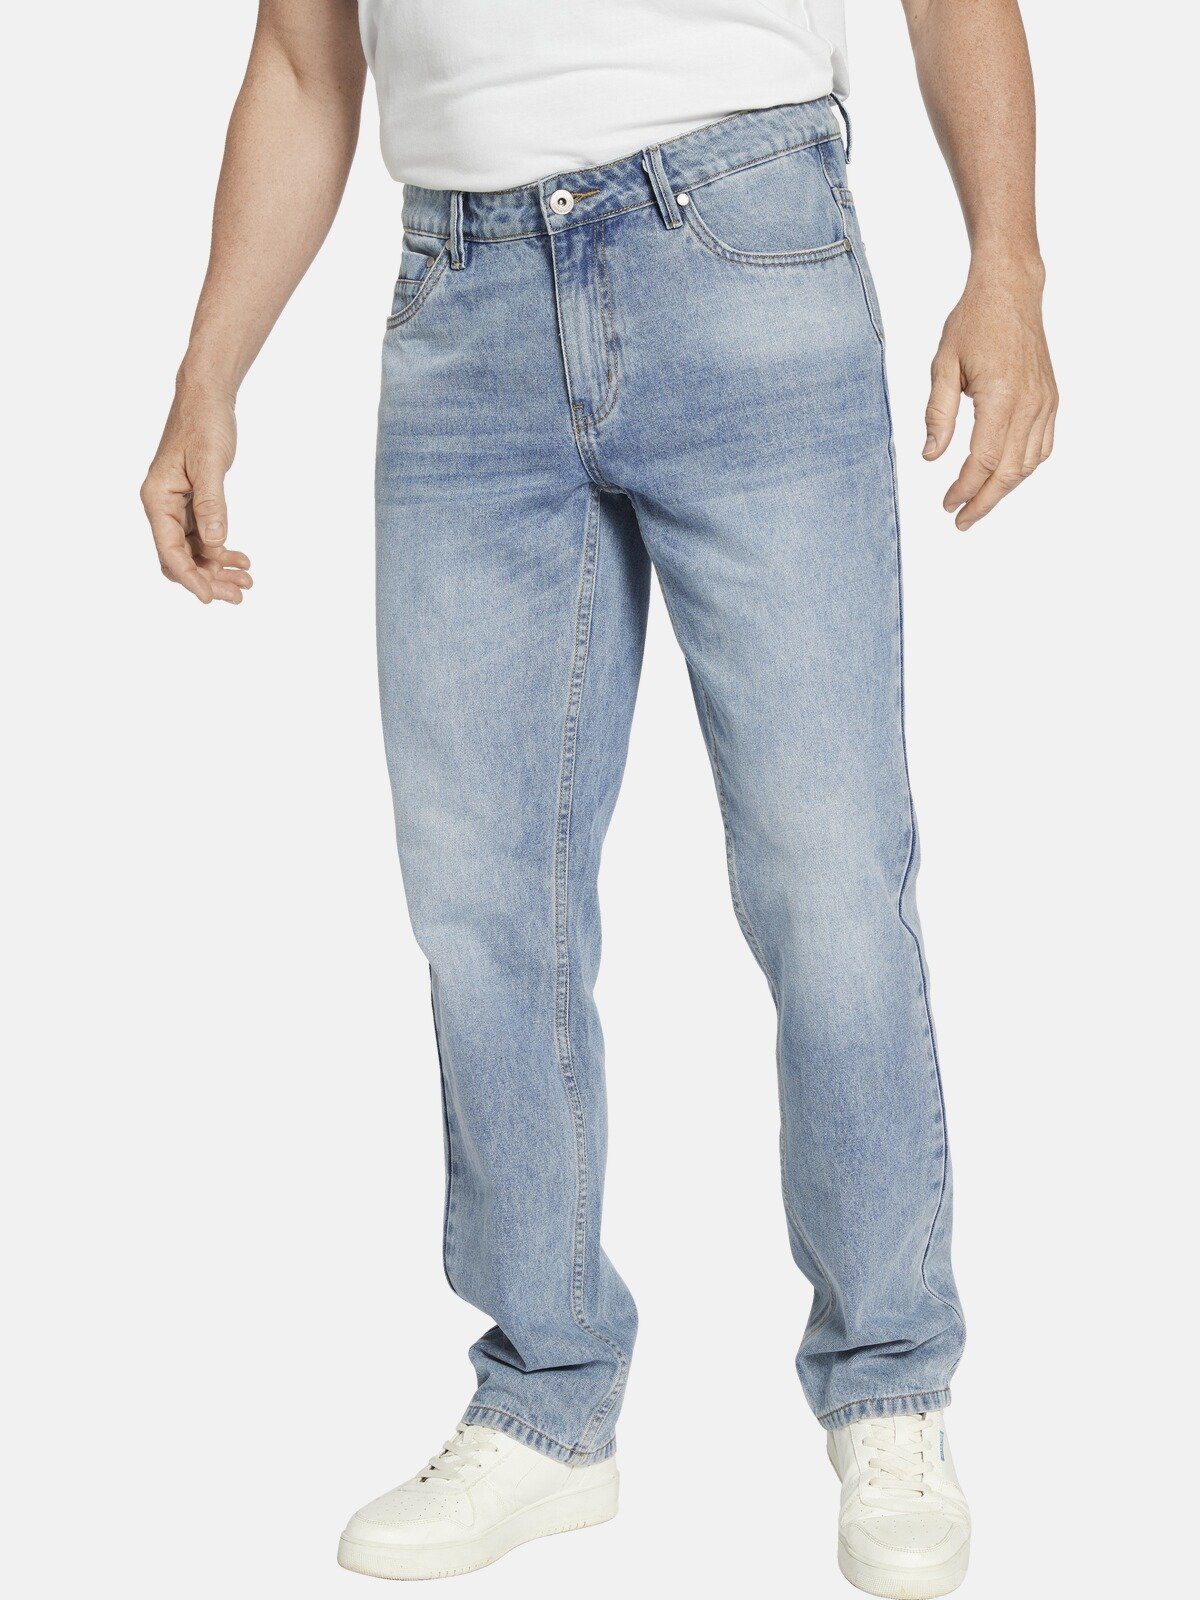 Five-Pocket-Style SIGUROR Comfort-fit-Jeans in Jan Vanderstorm